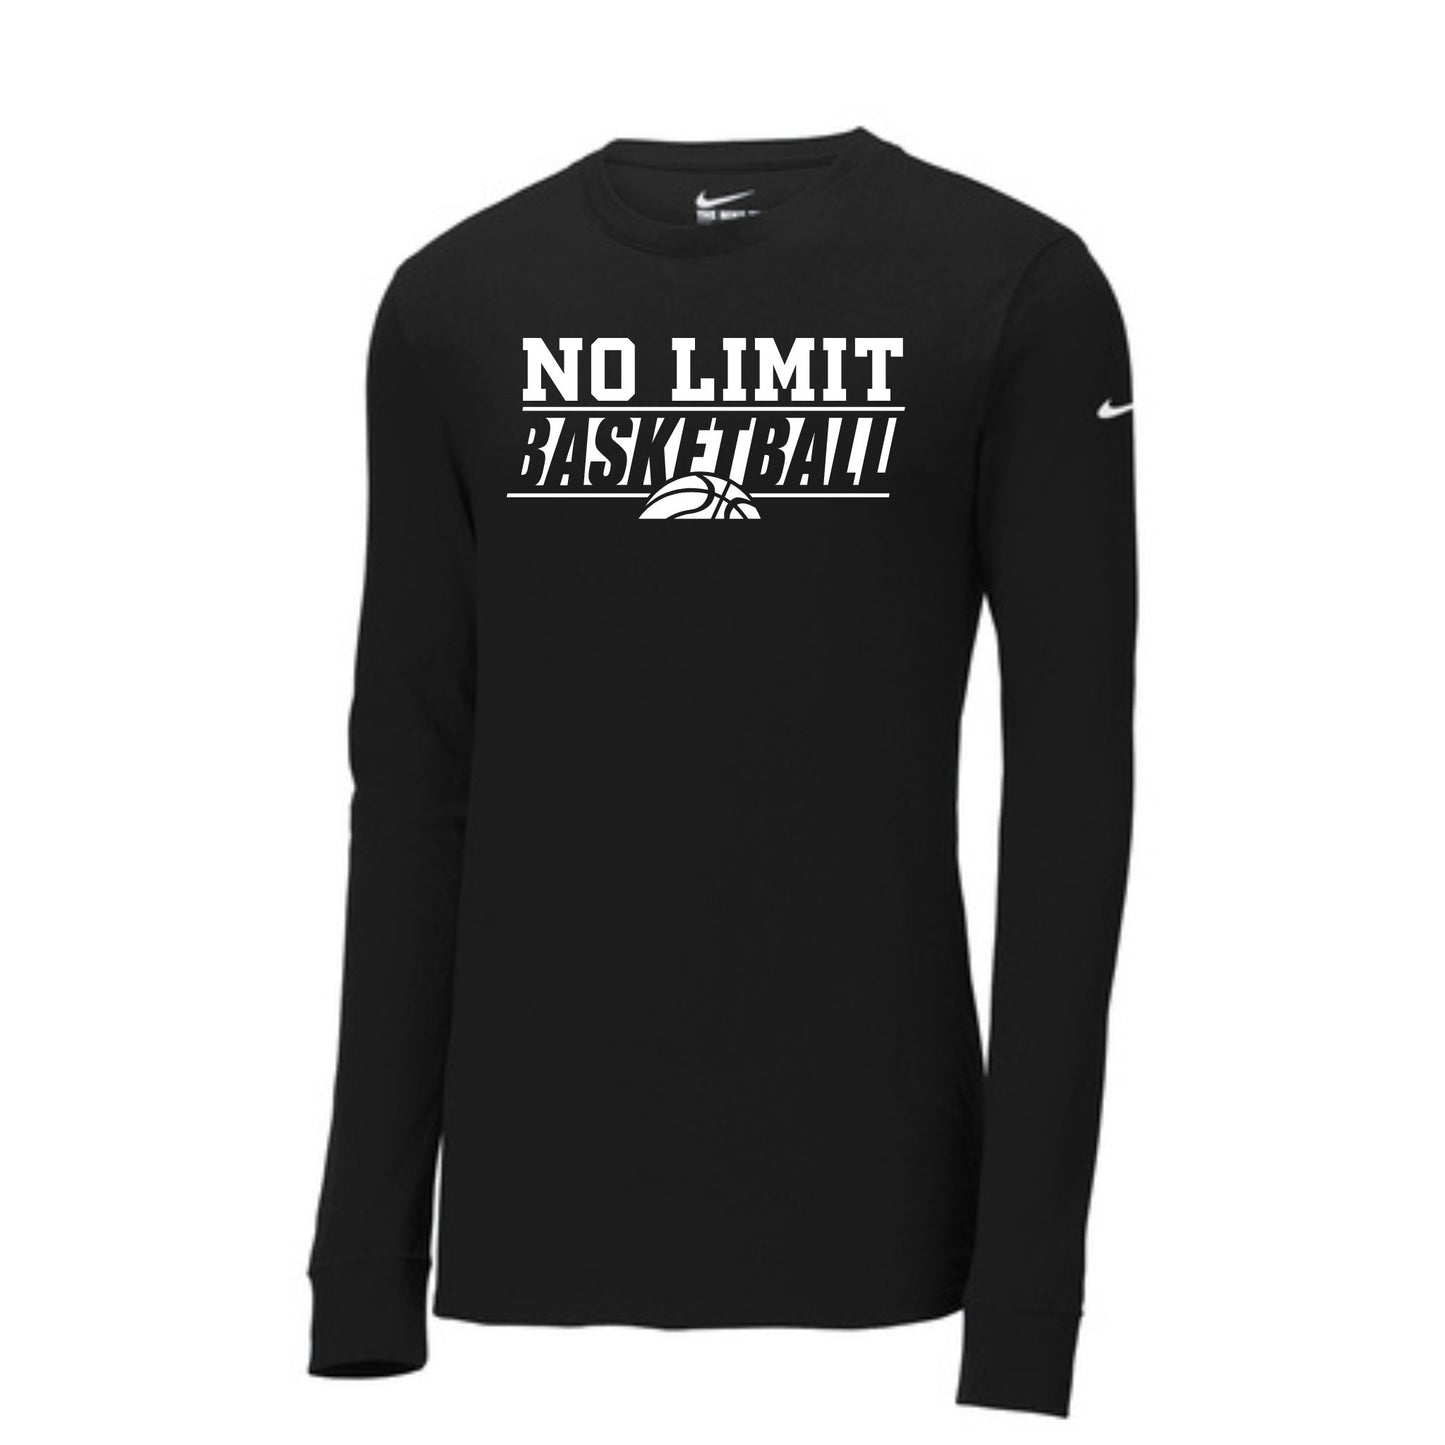 No Limit Basketball Design 1 - Nike Cotton/Poly Long Sleeve